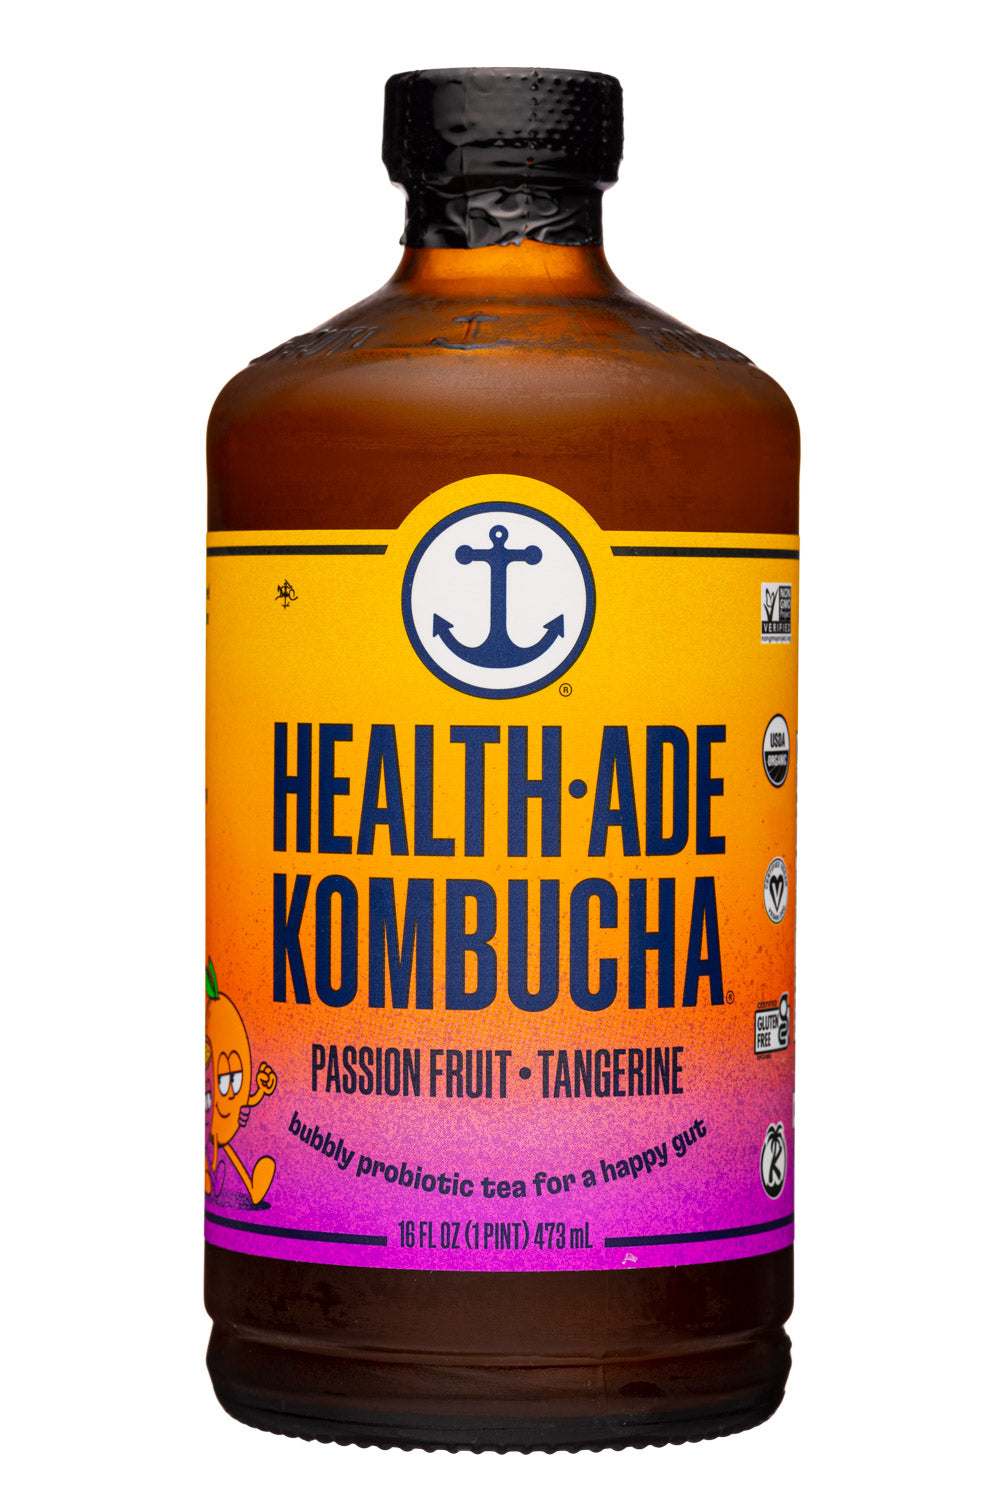 Passion Fruit and Tangerine Kombucha by Health Ade, 473ml